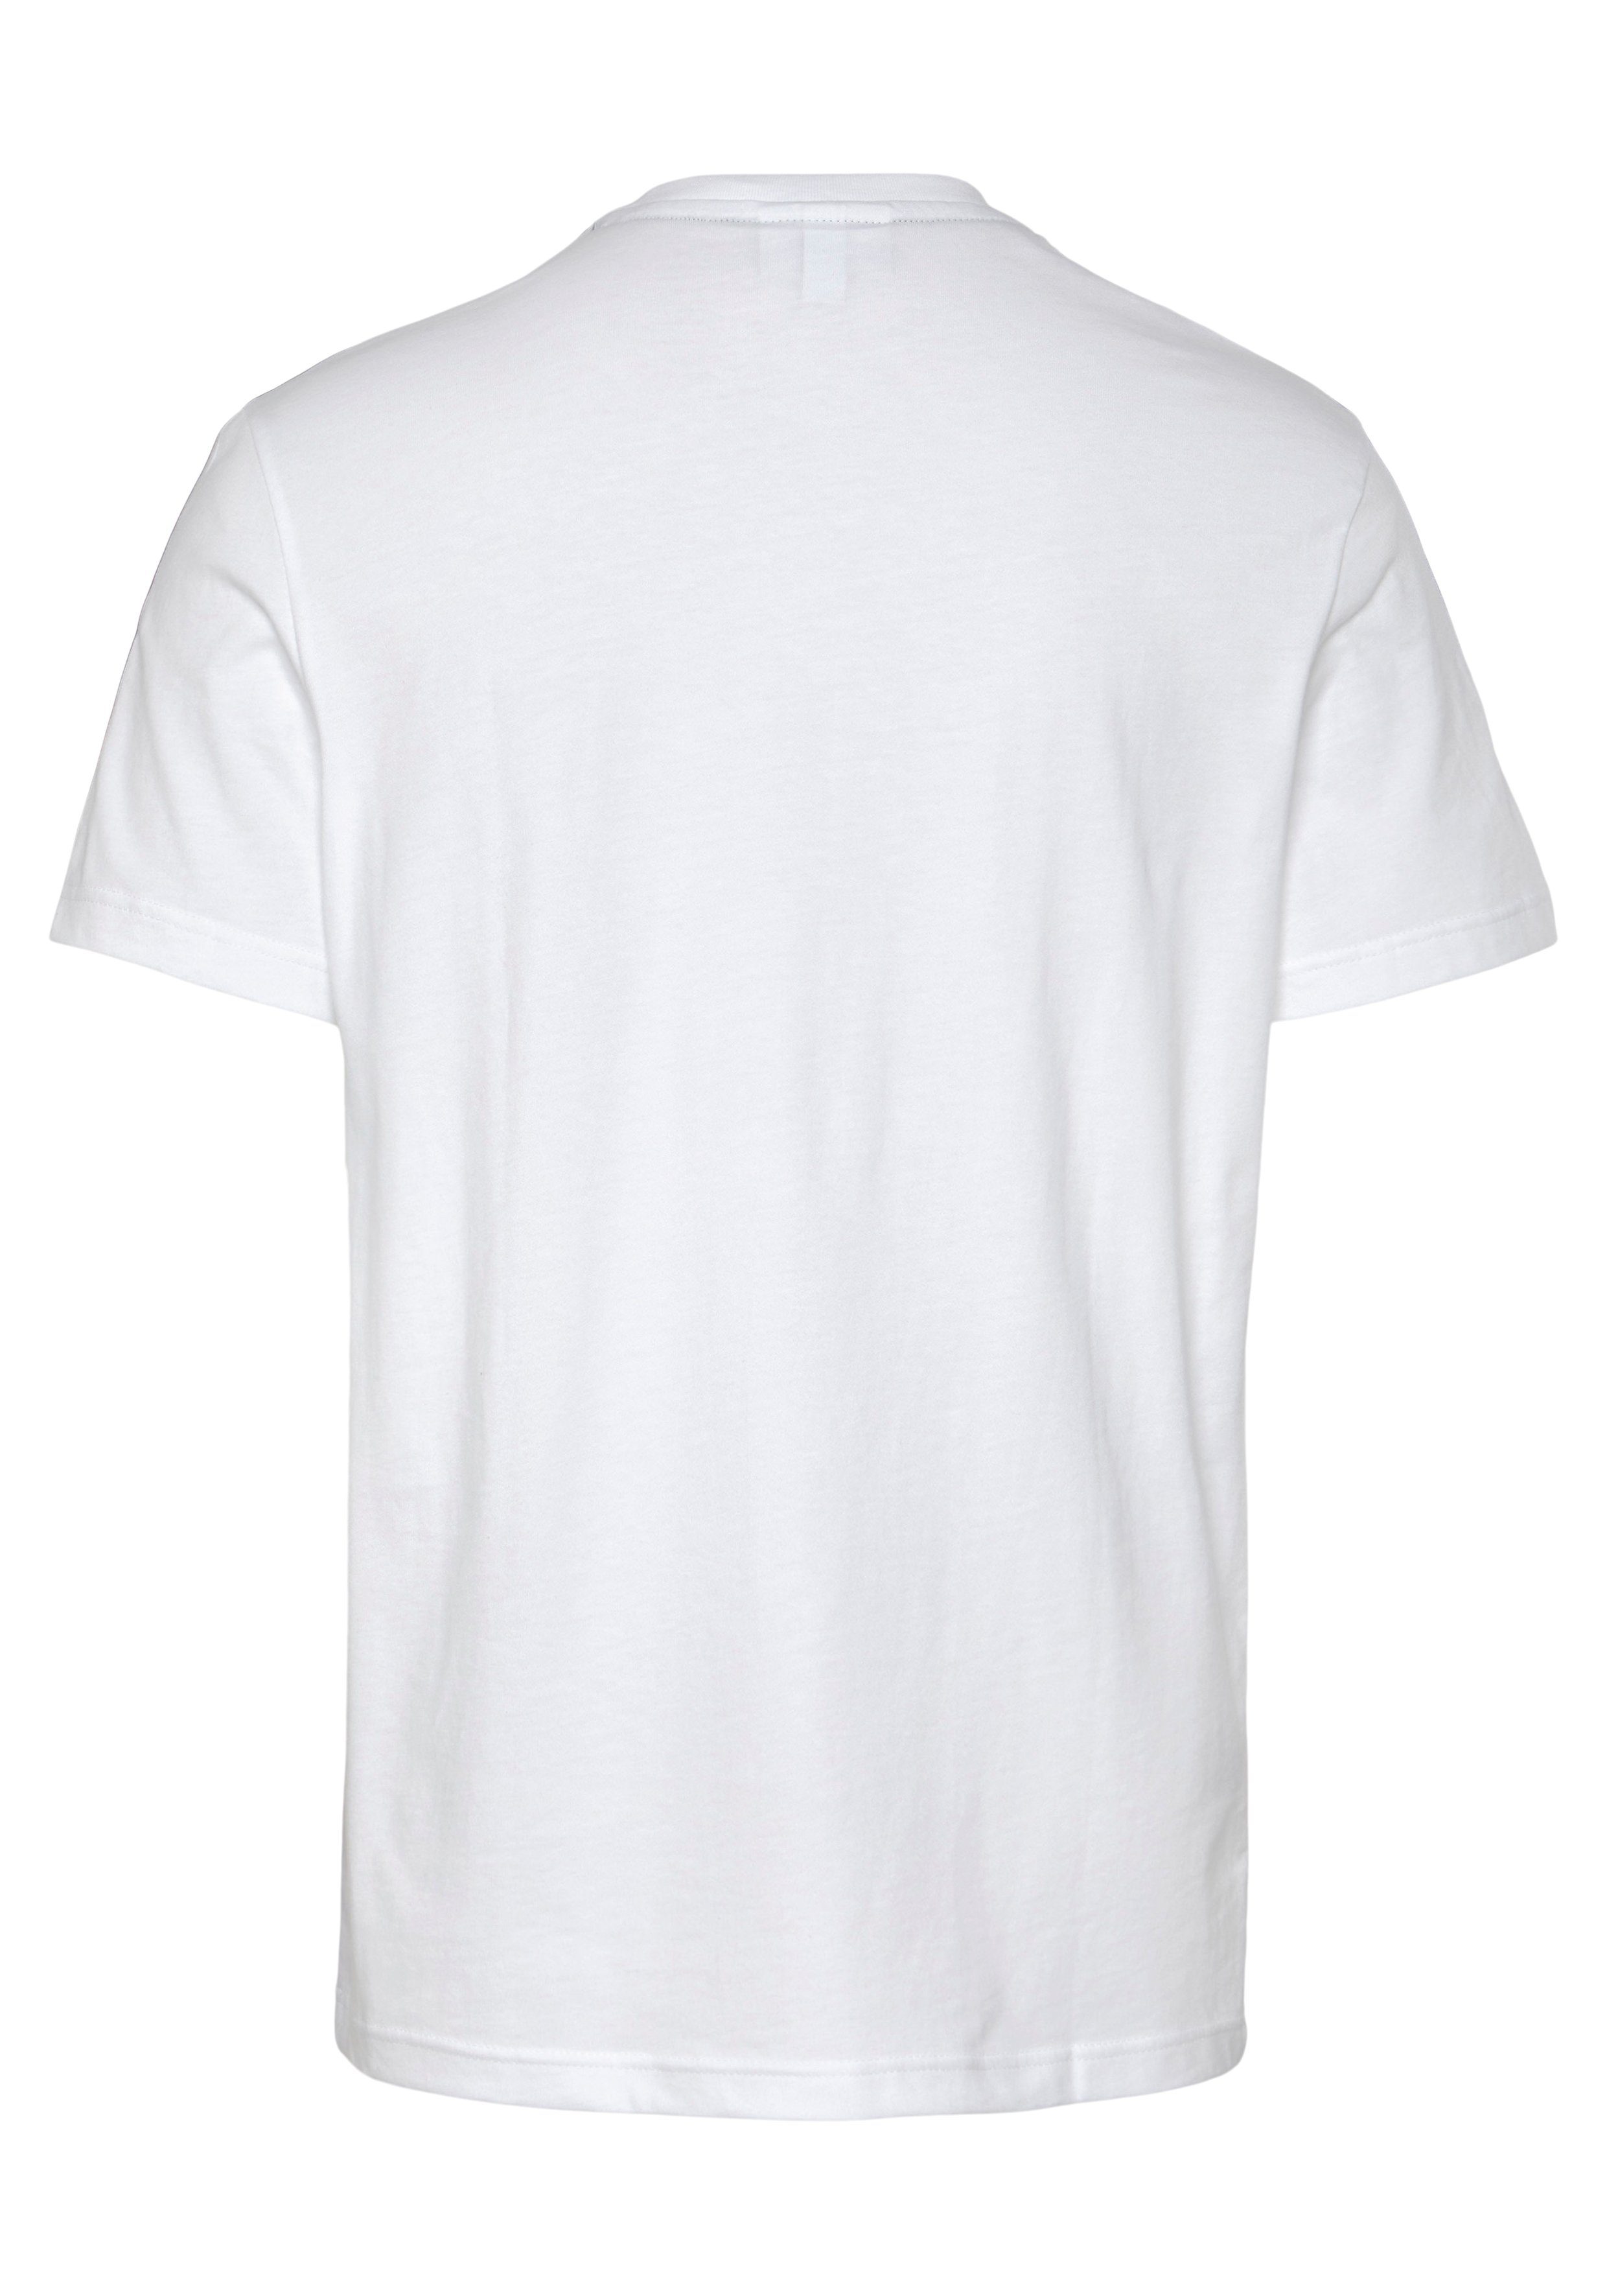 den an beschriftetem white Schultern Lacoste Kontrastband mit T-Shirt